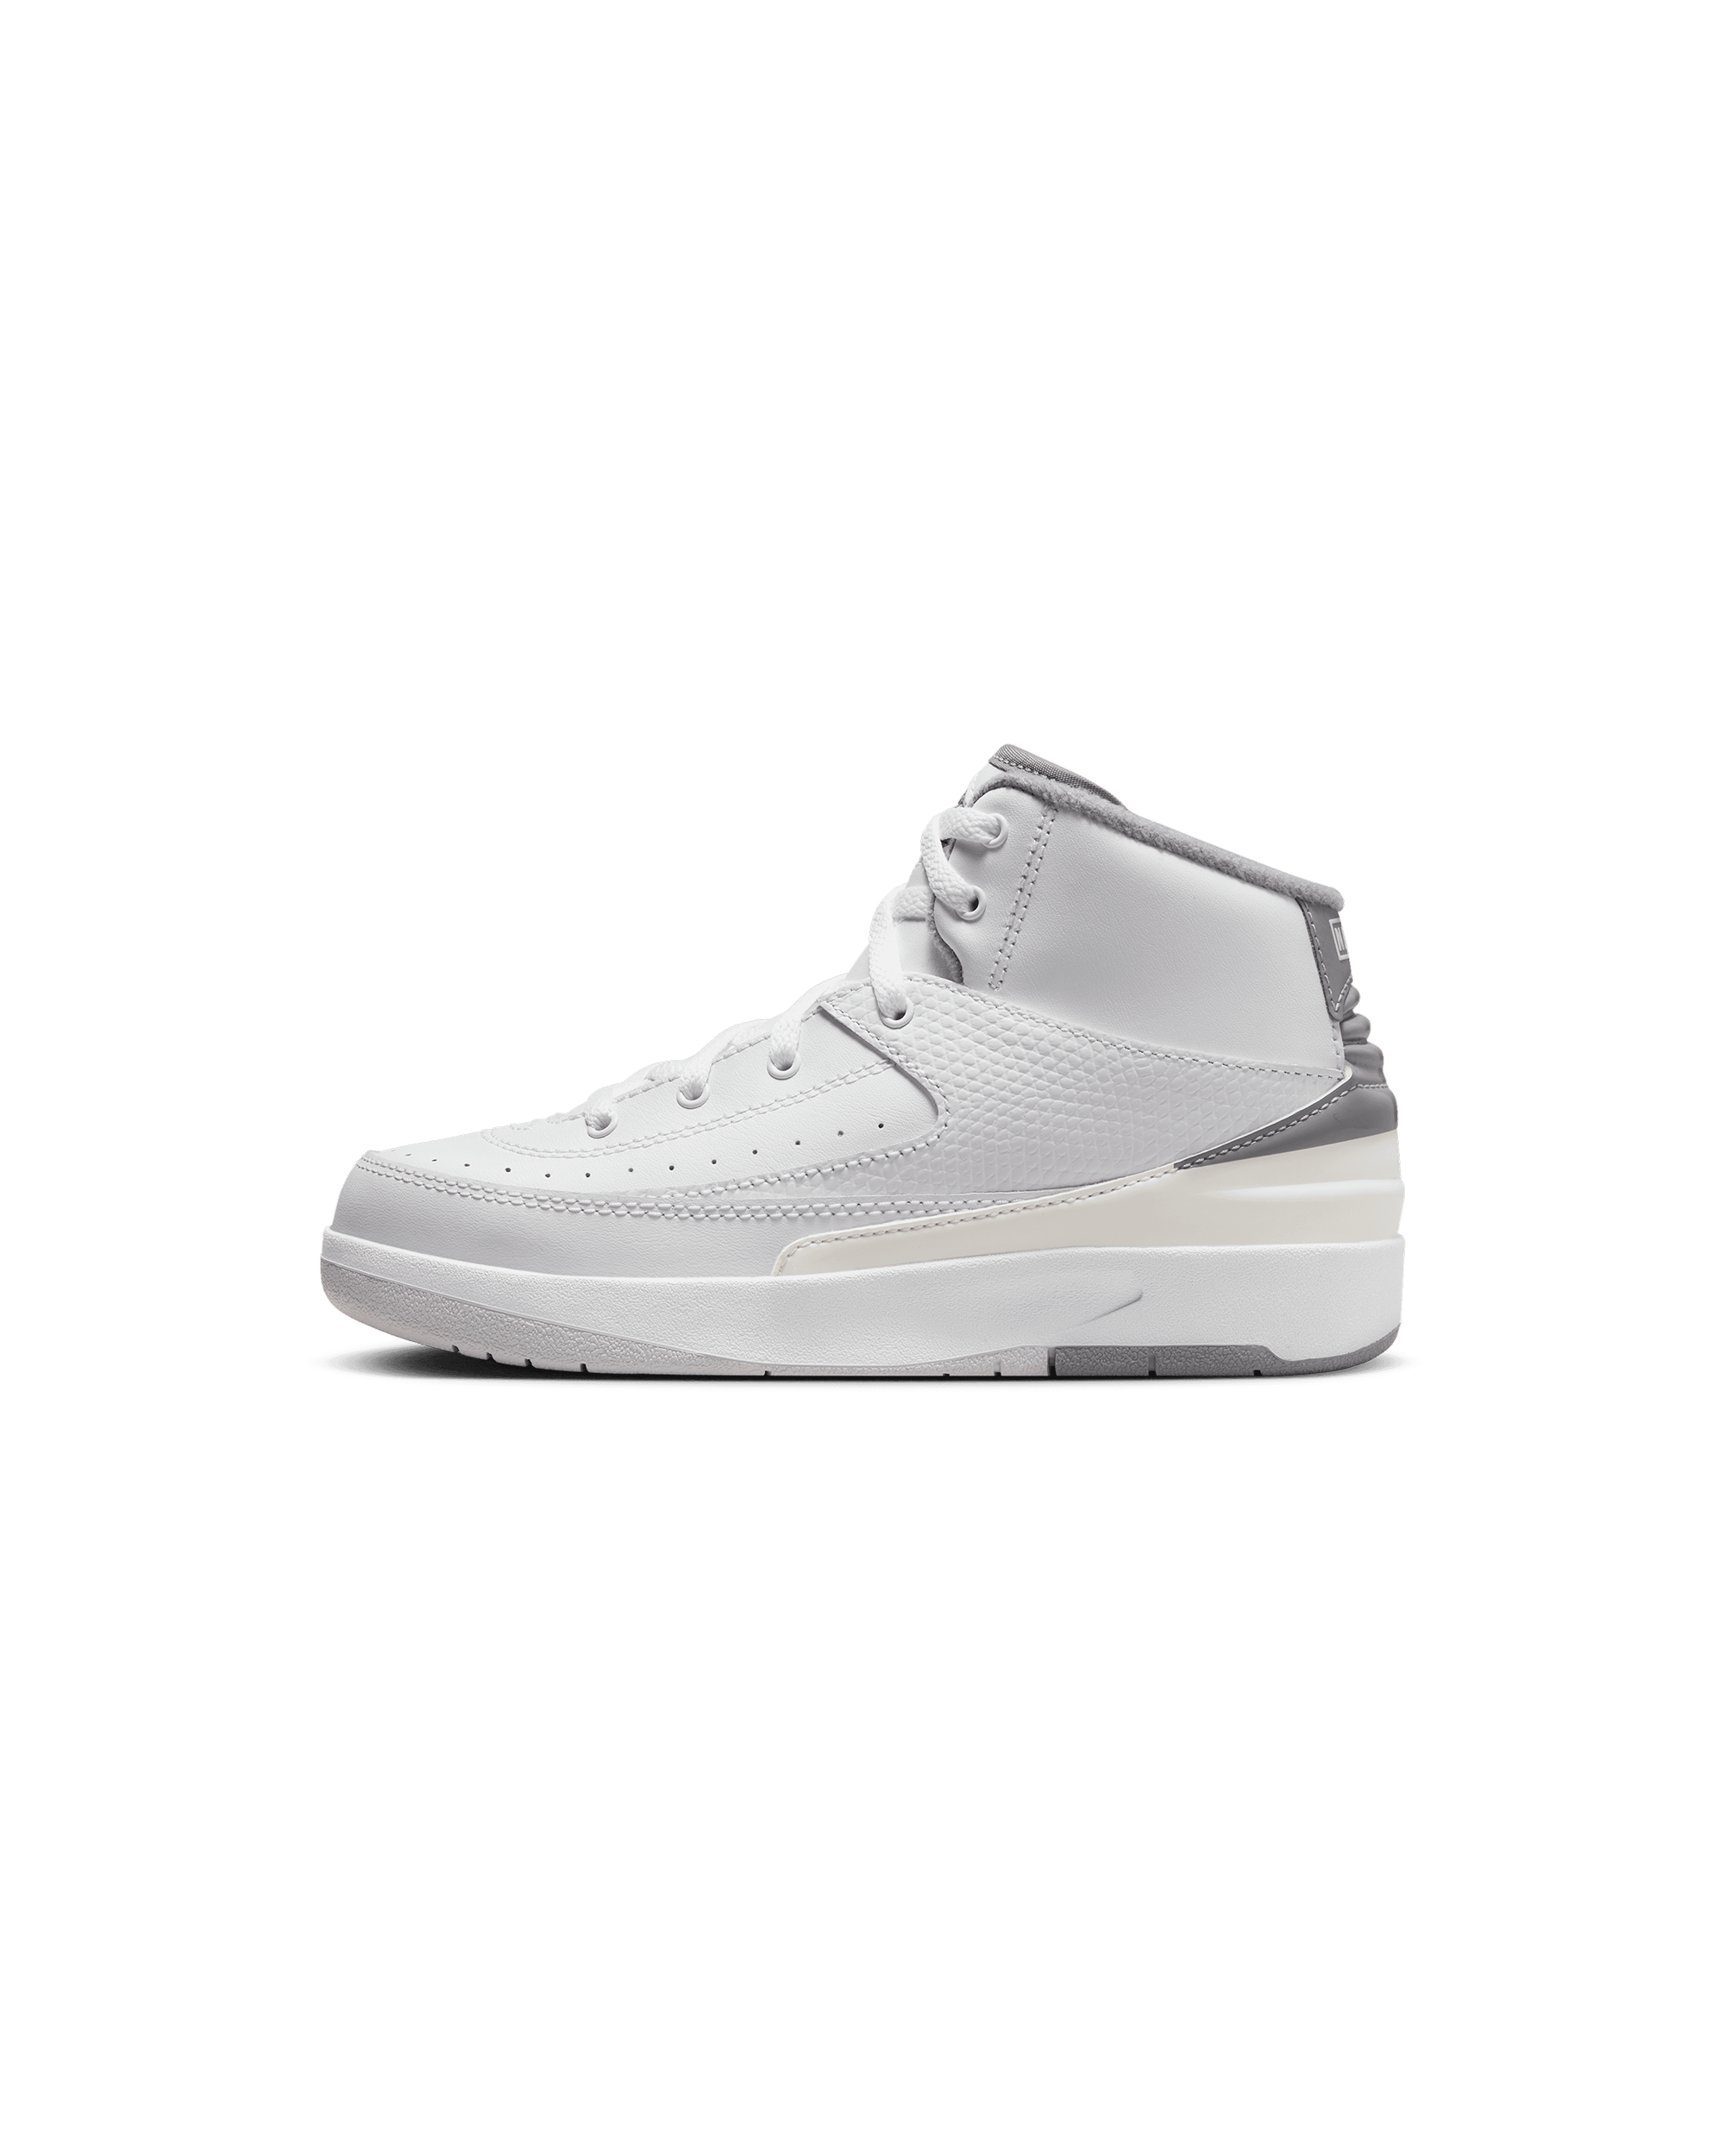 Jordan 2 Retro (PS) - White / Cement Grey / Sail